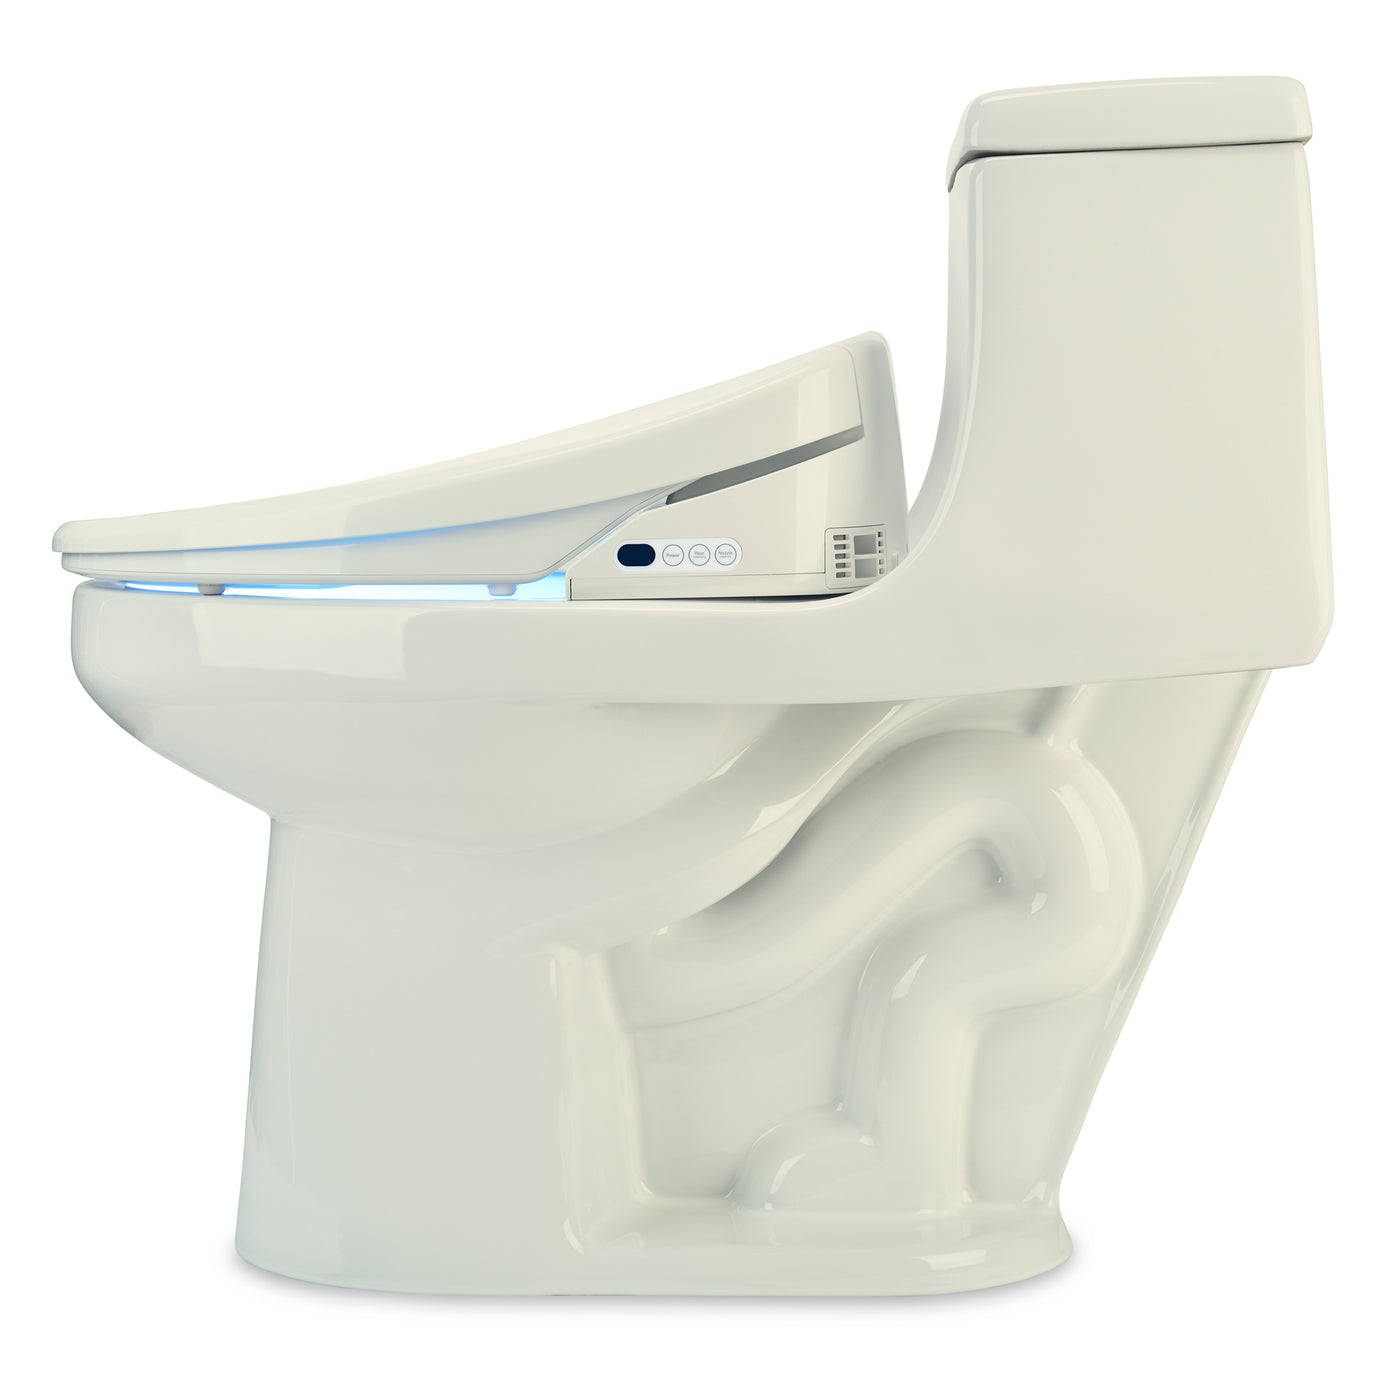 Brondell Luxury Bidet Toilet Seat Swash 1400 Elongated Biscuit S1400-EB